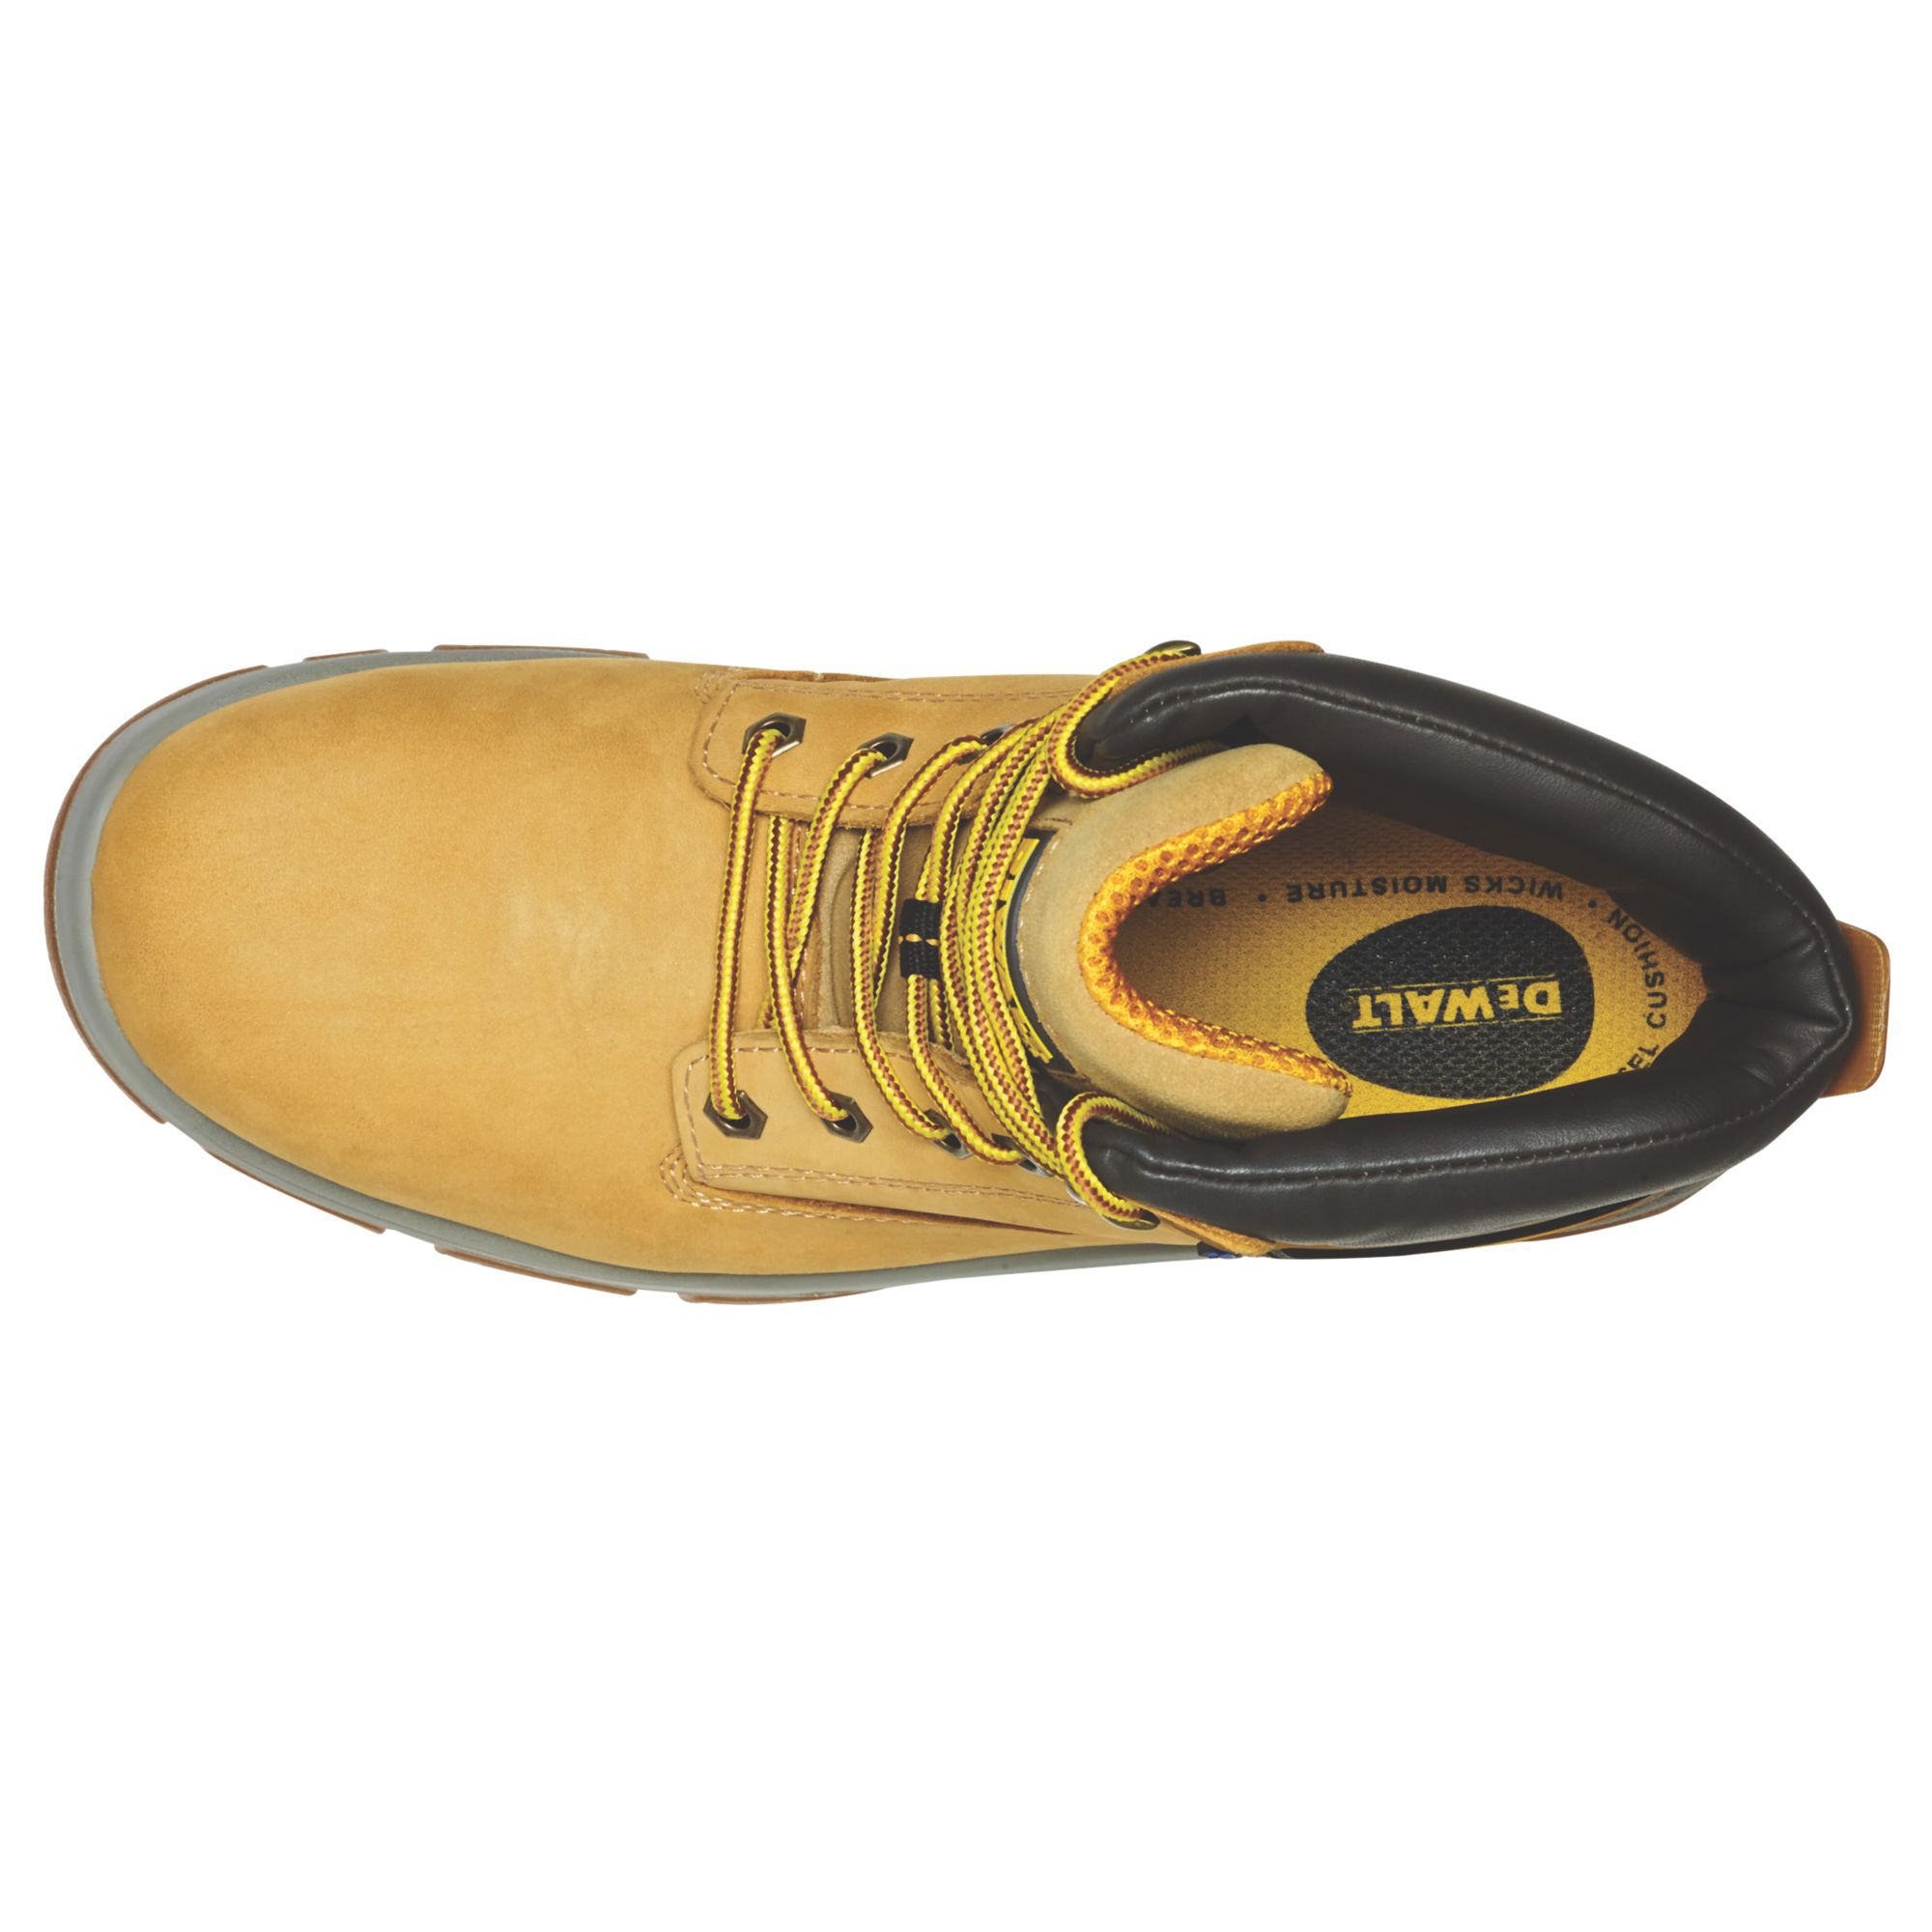 DeWalt Titanium Men's Honey Safety boots, Size 12